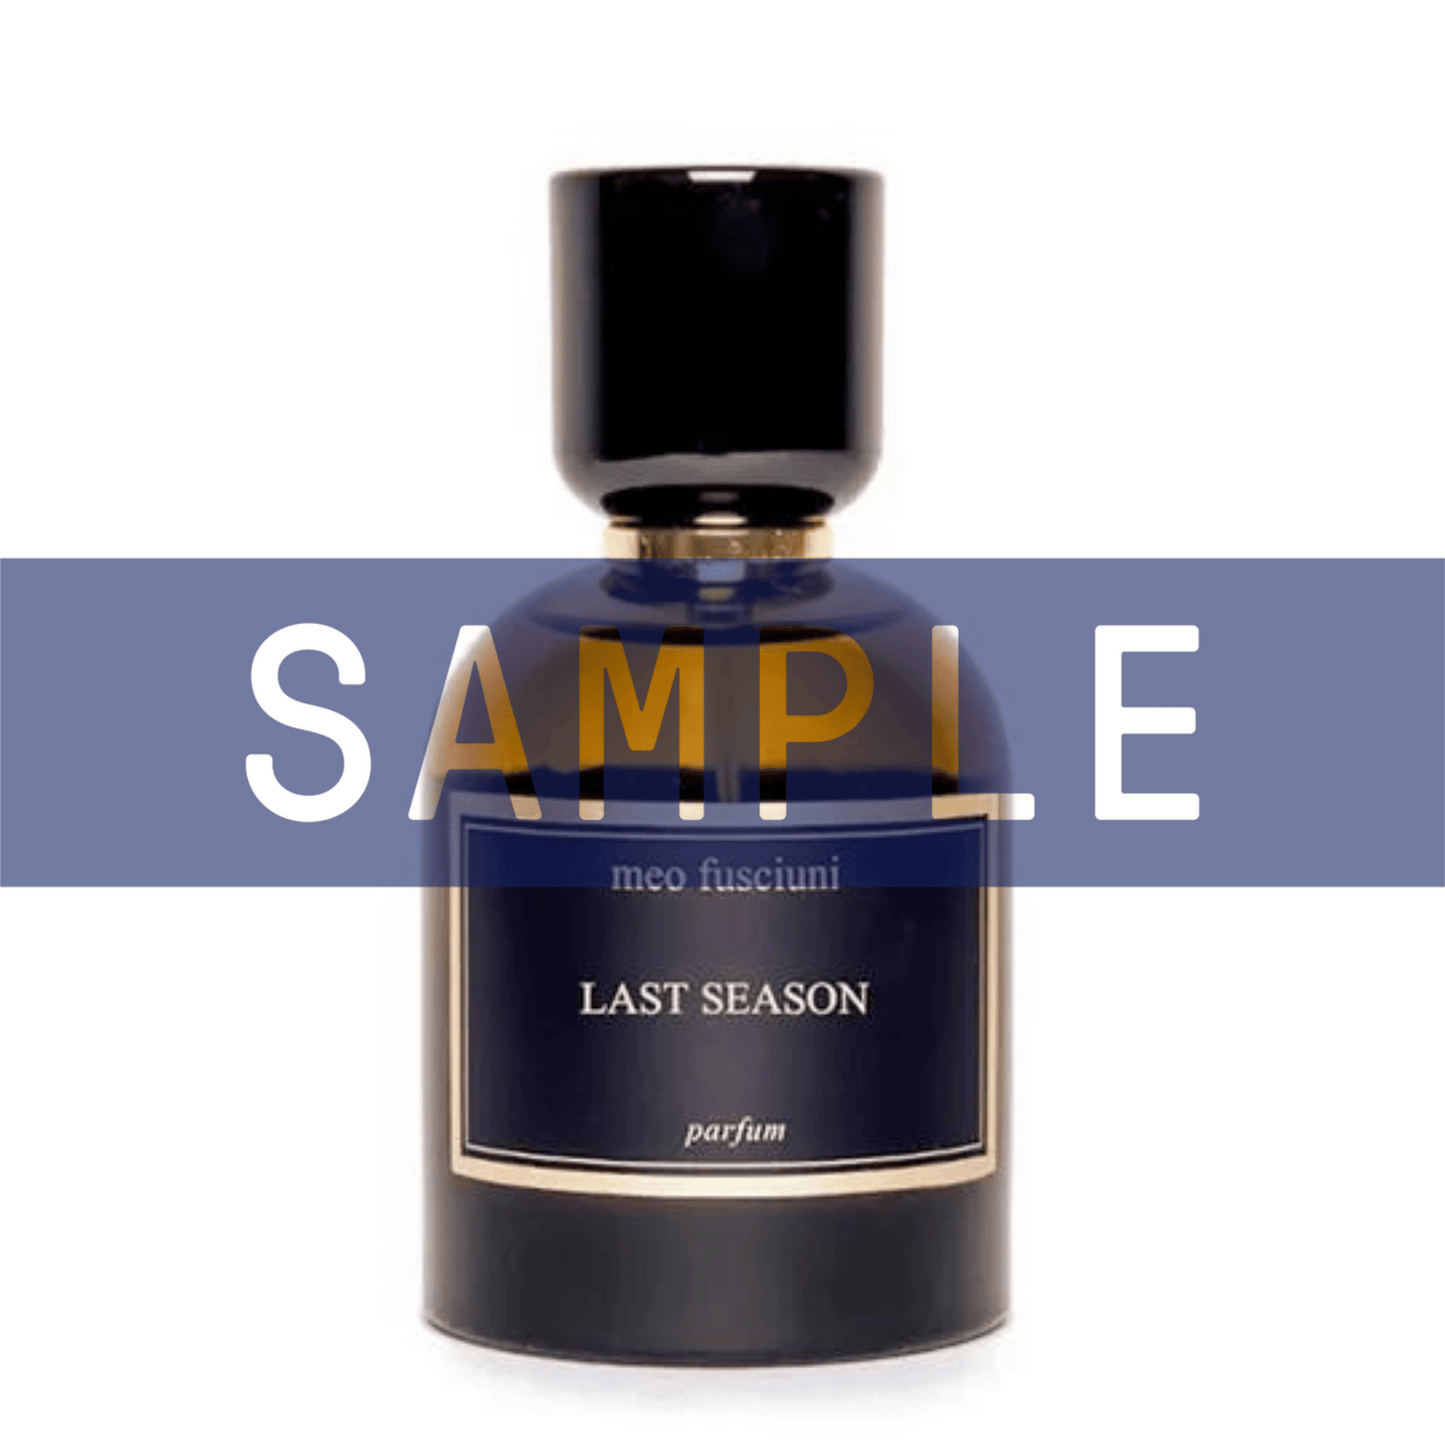 Primary Image of Sample - Last Season Eau de Parfum